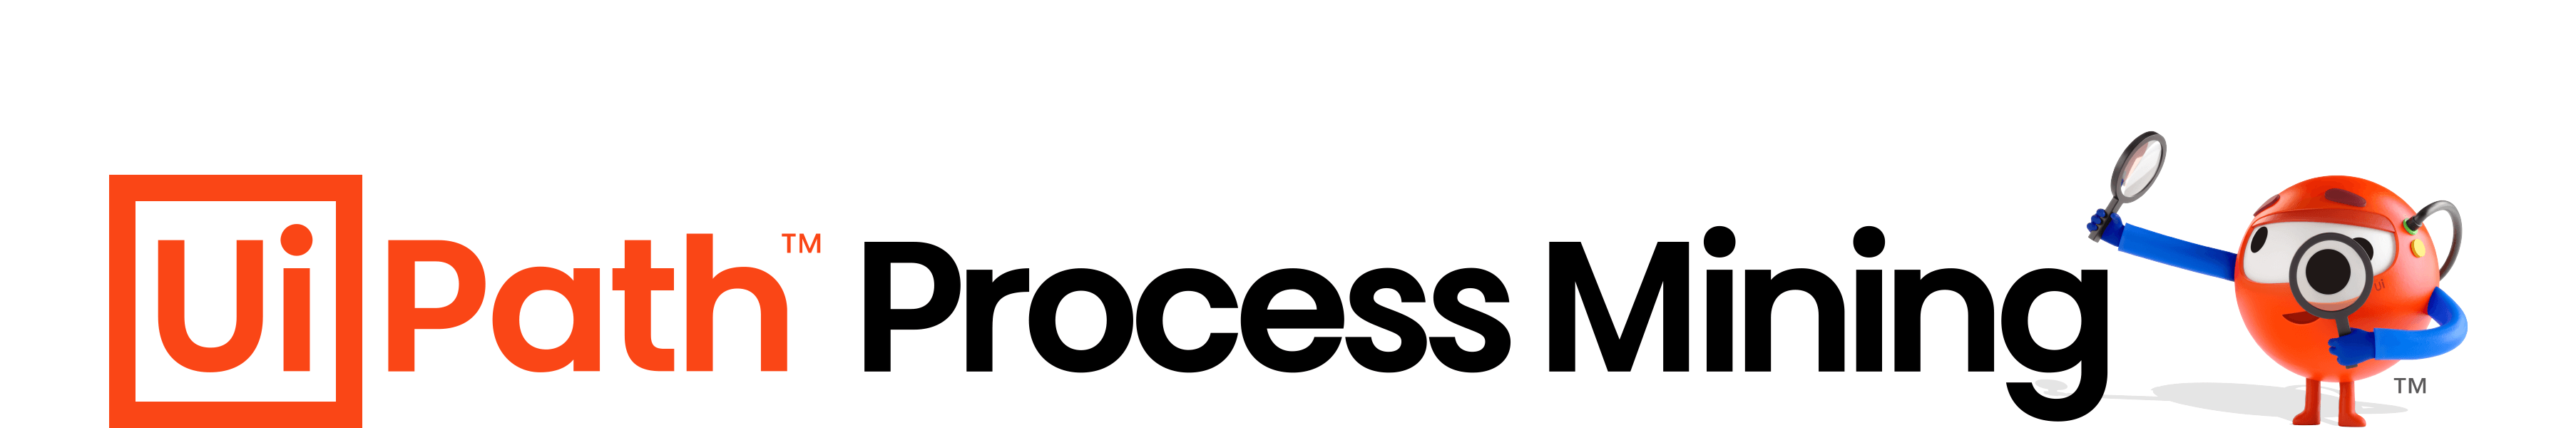 Process Mining logo